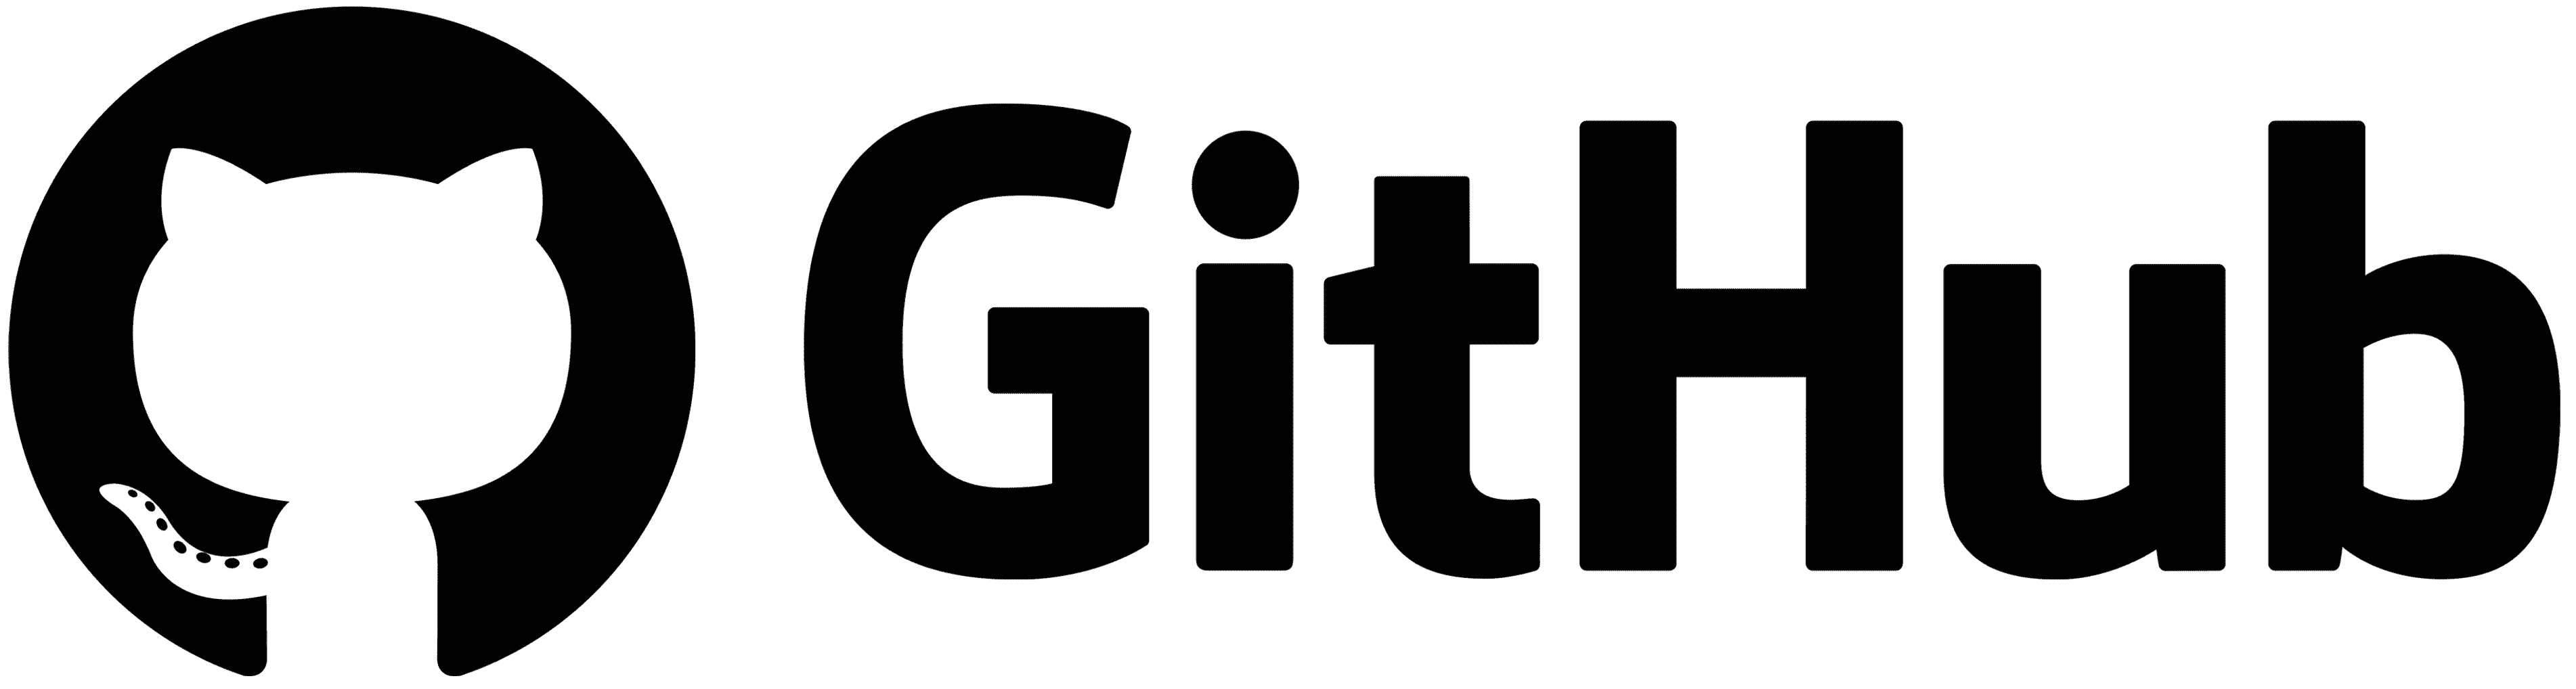 GitHub vendor logo